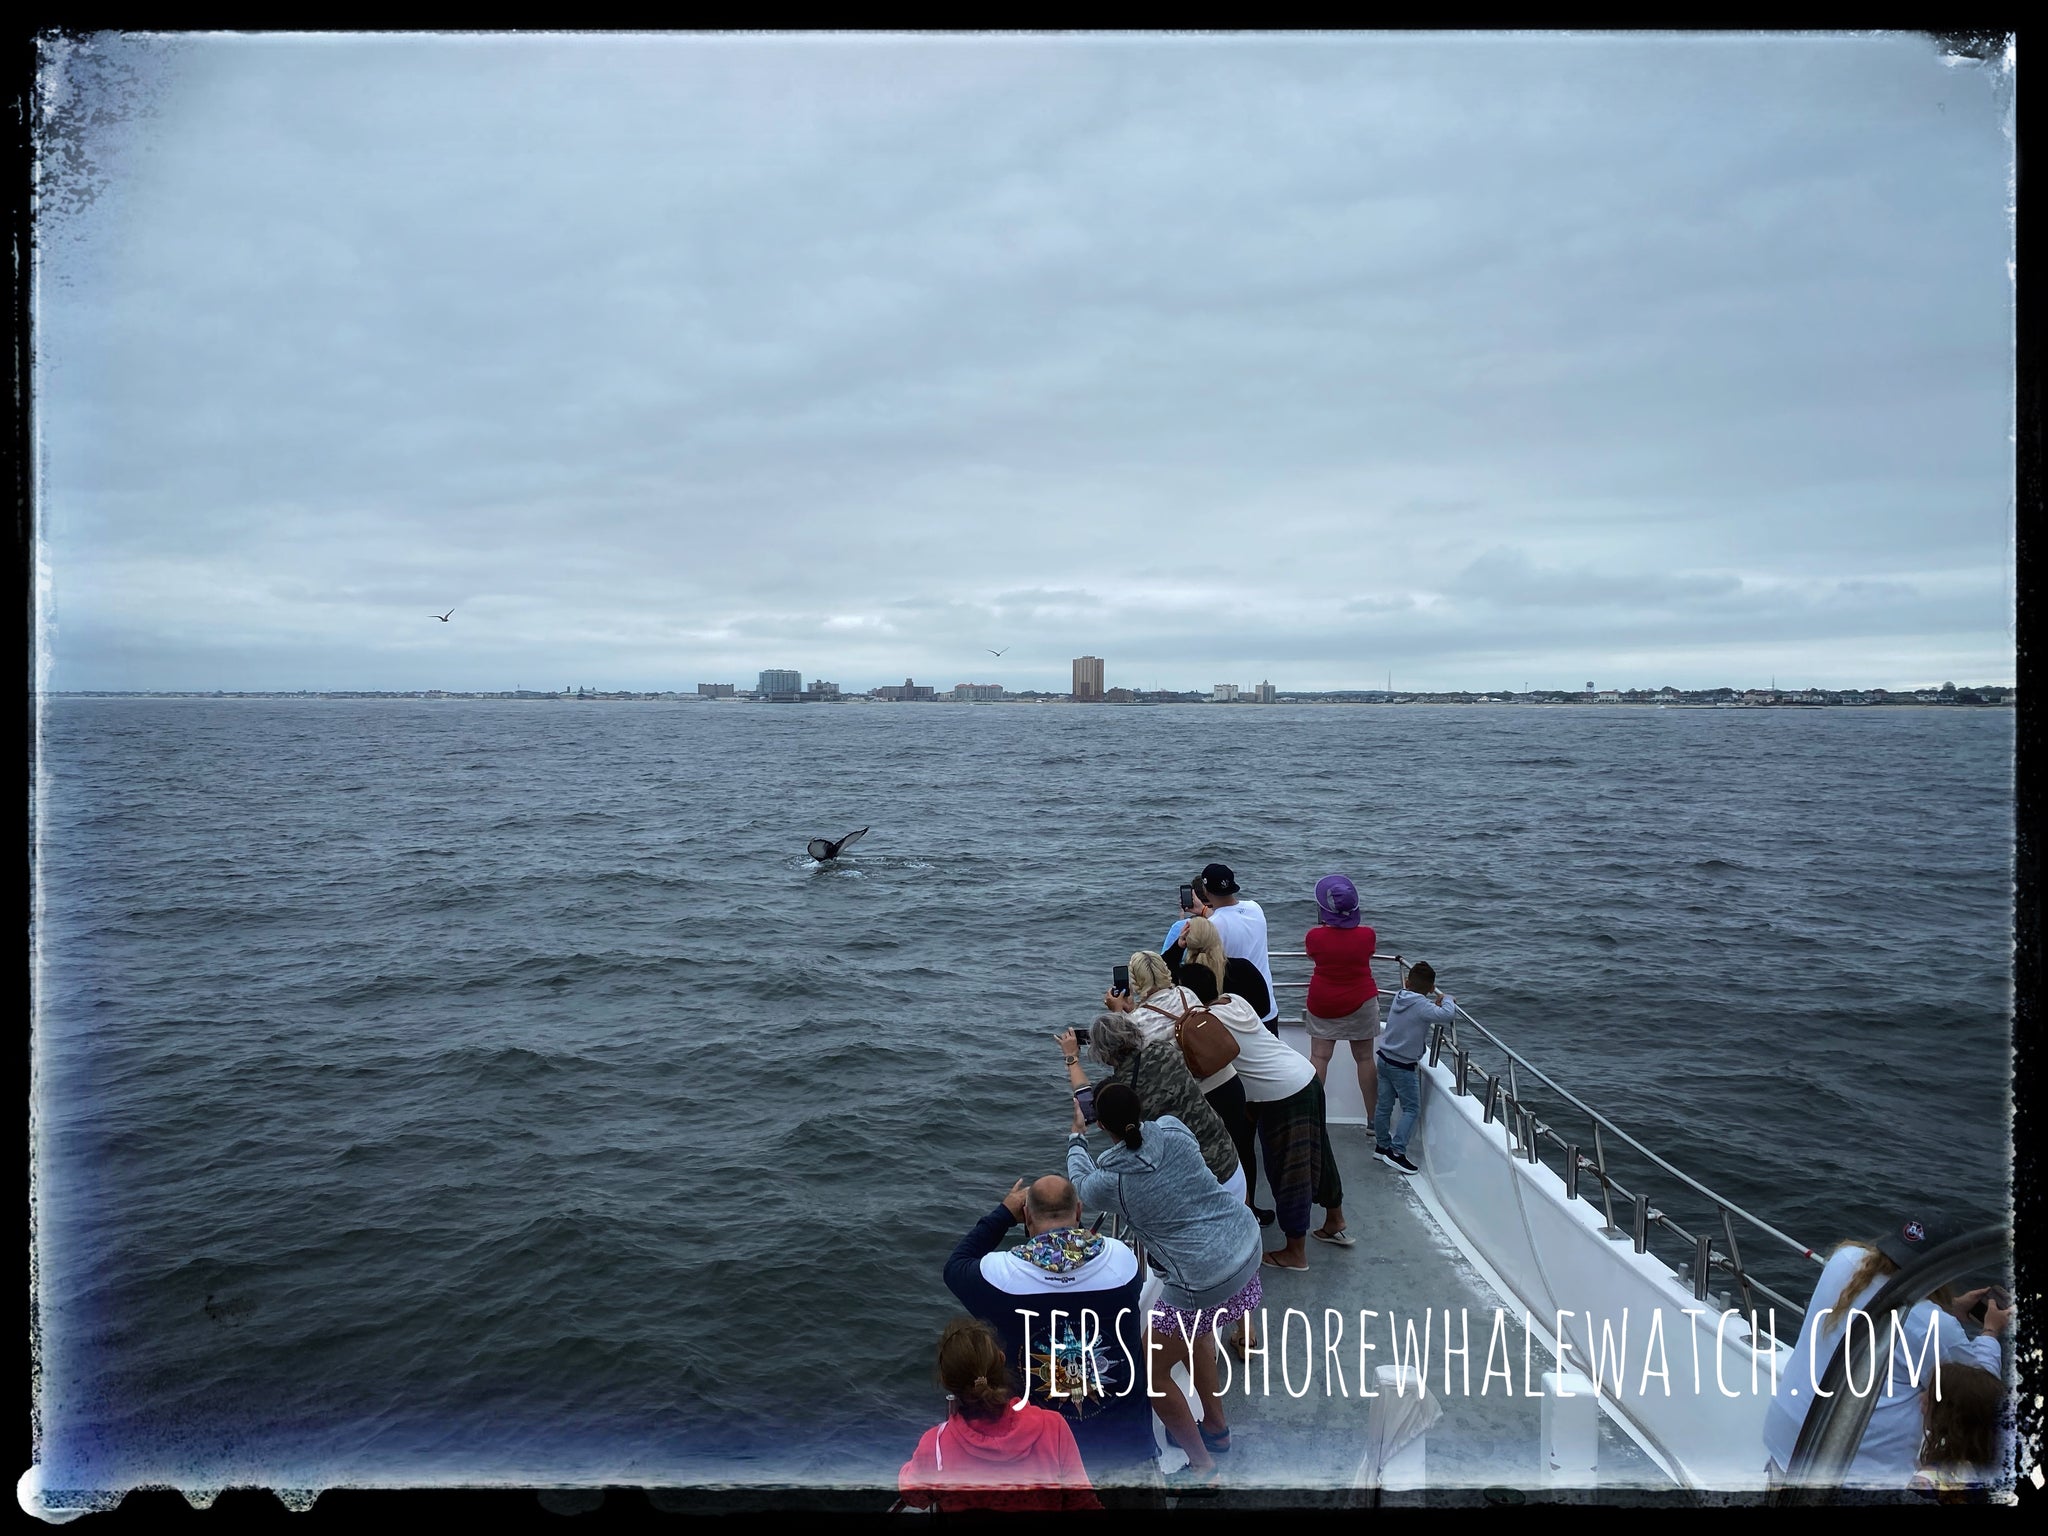 Jersey shore whale watch trip photos 